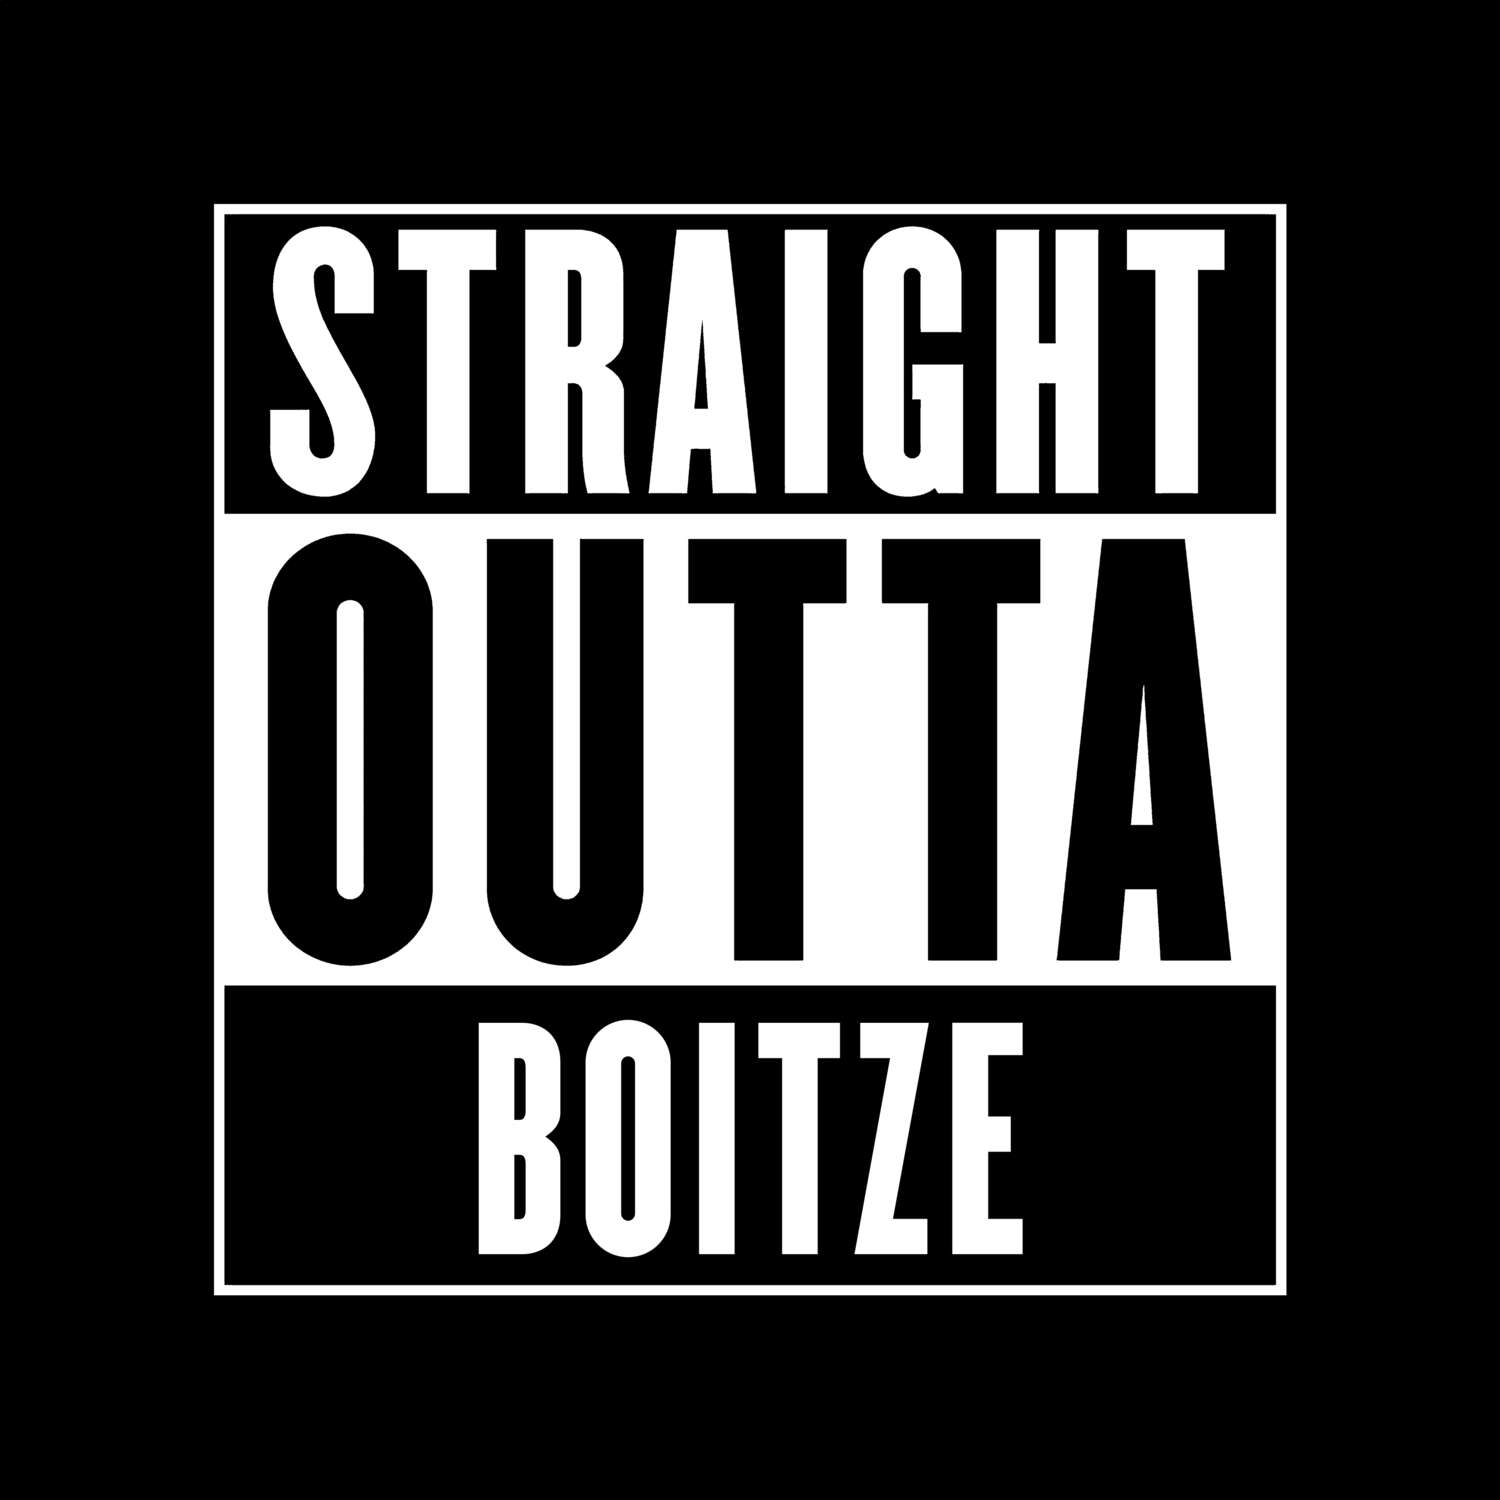 Boitze T-Shirt »Straight Outta«